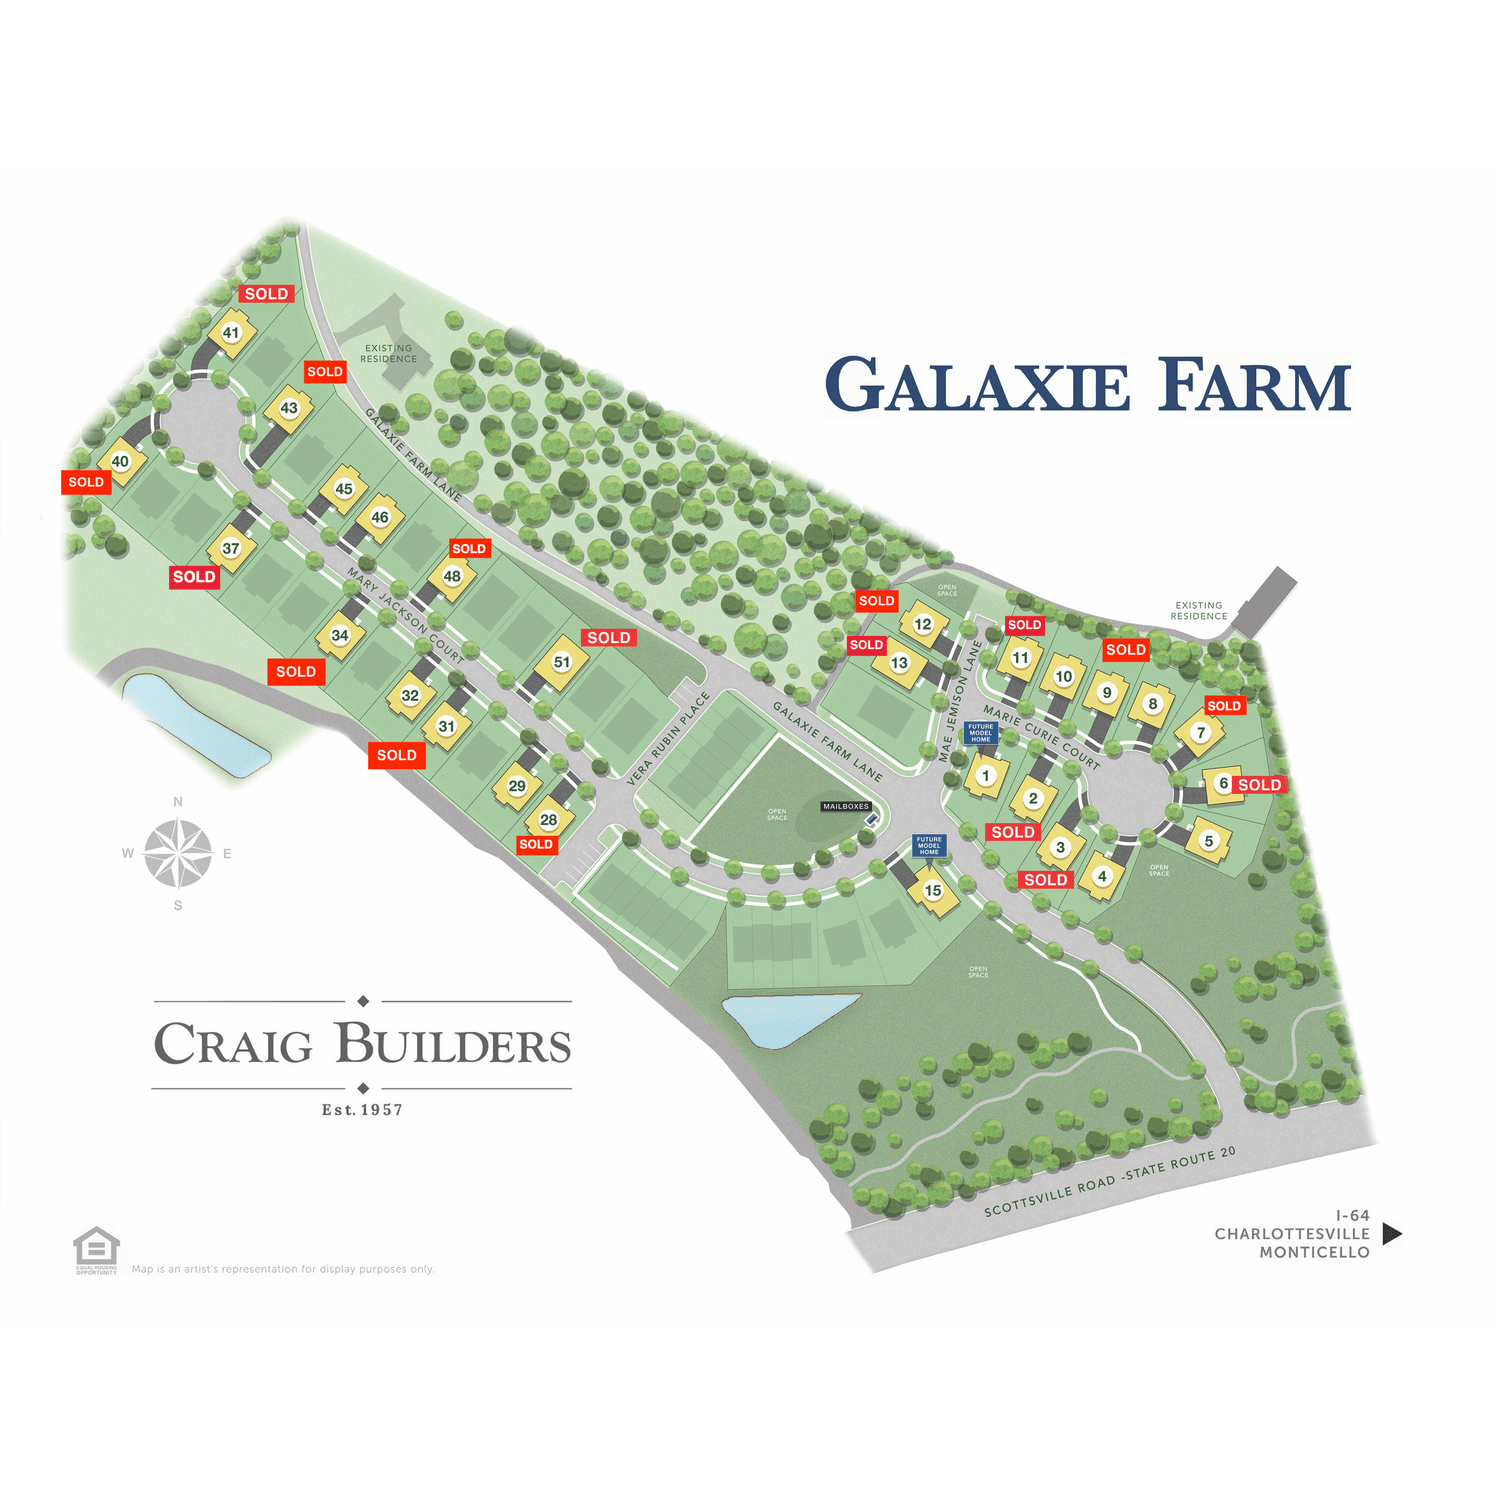 12. Galaxie Farm building at 4006 Marie Curie Court, Charlottesville, VA 22902